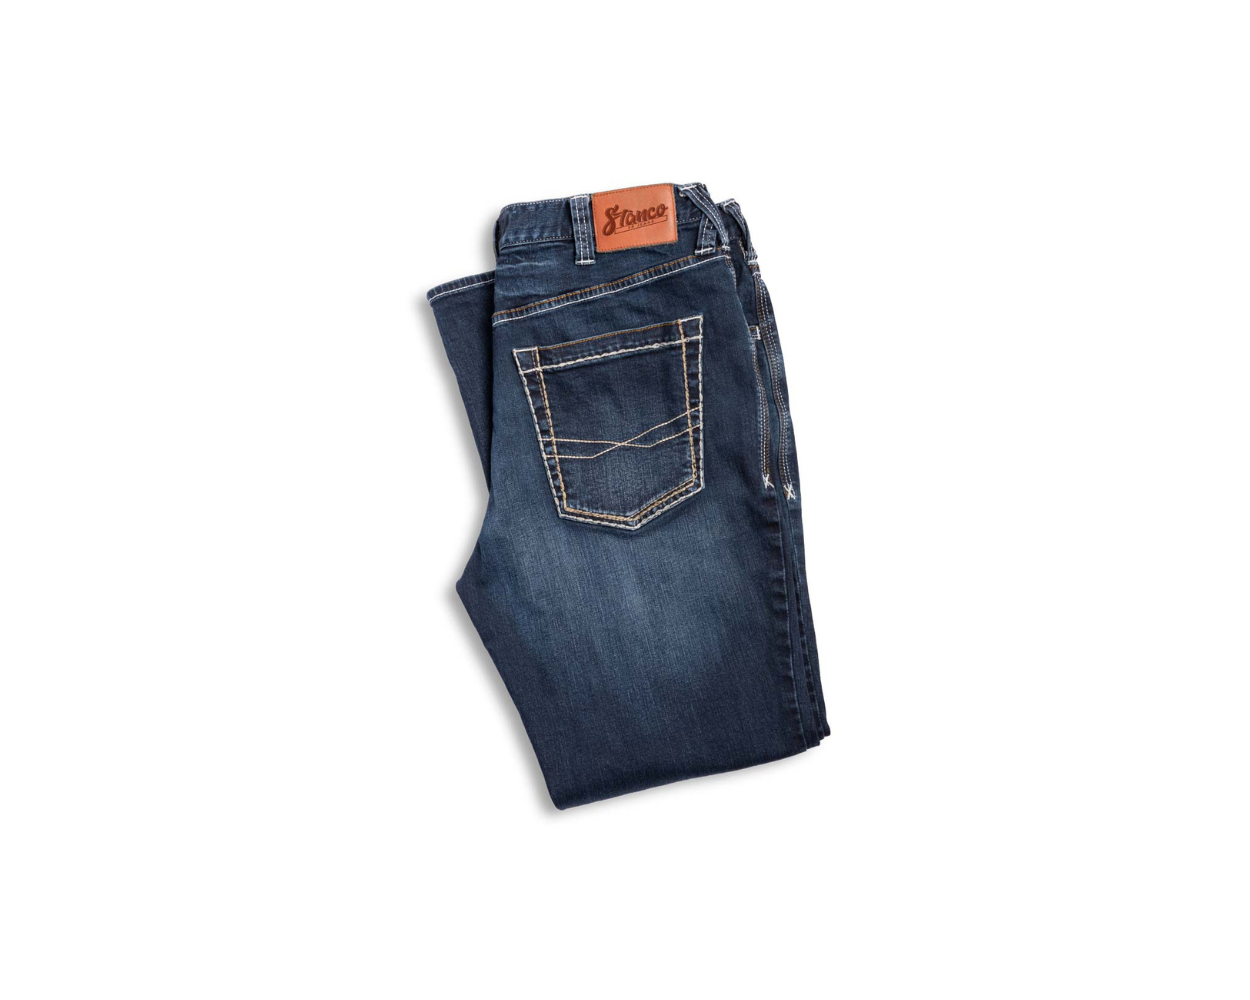 Saint Laurent 18cm stone washed jeans men - Glamood Outlet-saigonsouth.com.vn